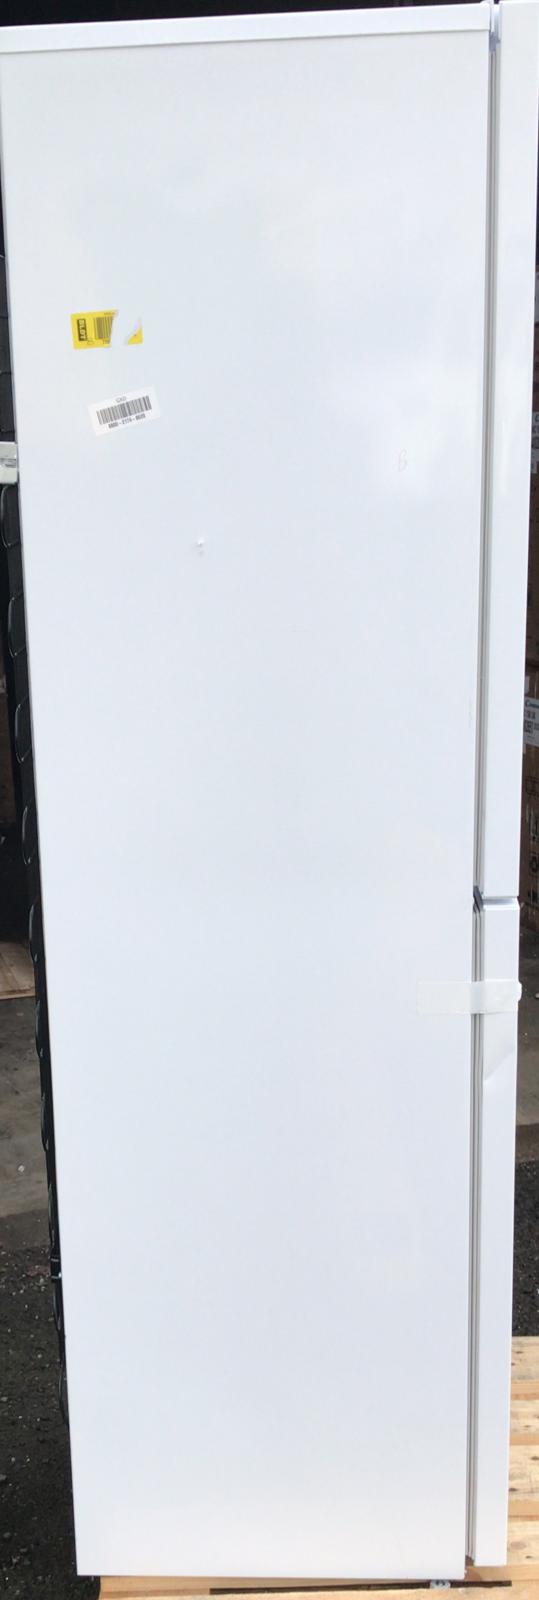 Beko Fridge freezer-Freestanding-White-CFG3582W- 1646